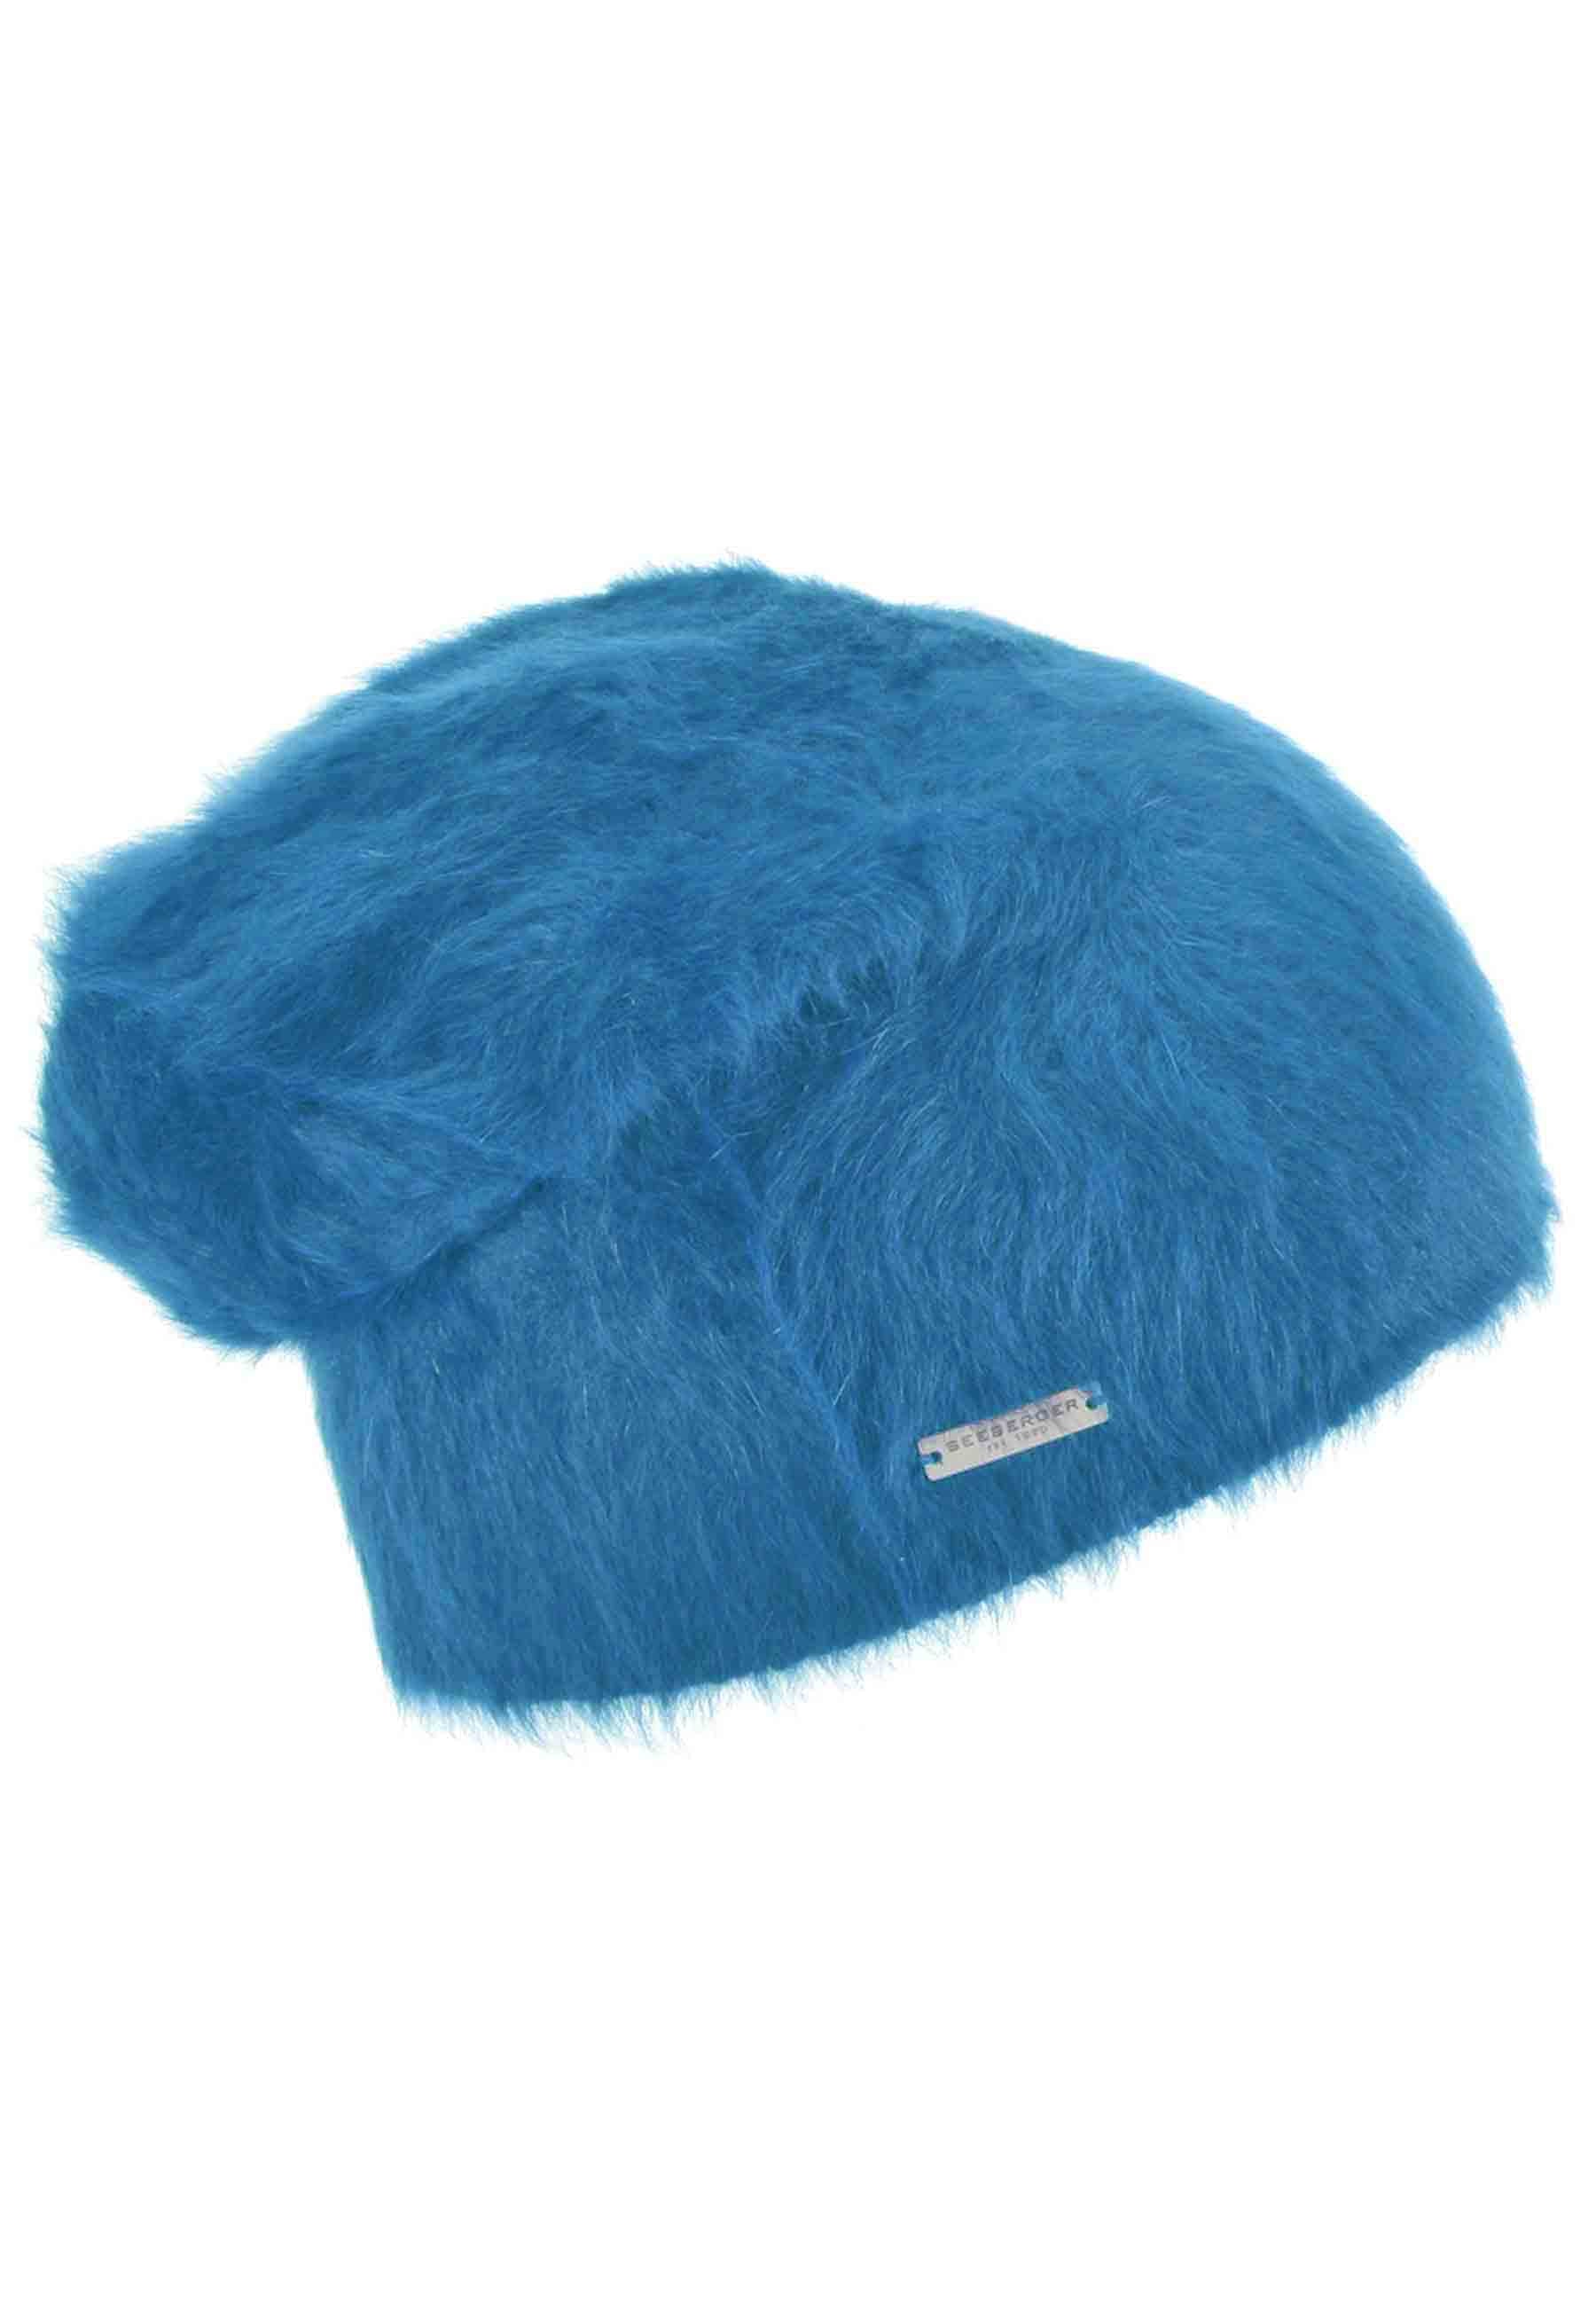 Light blue angora wool hat